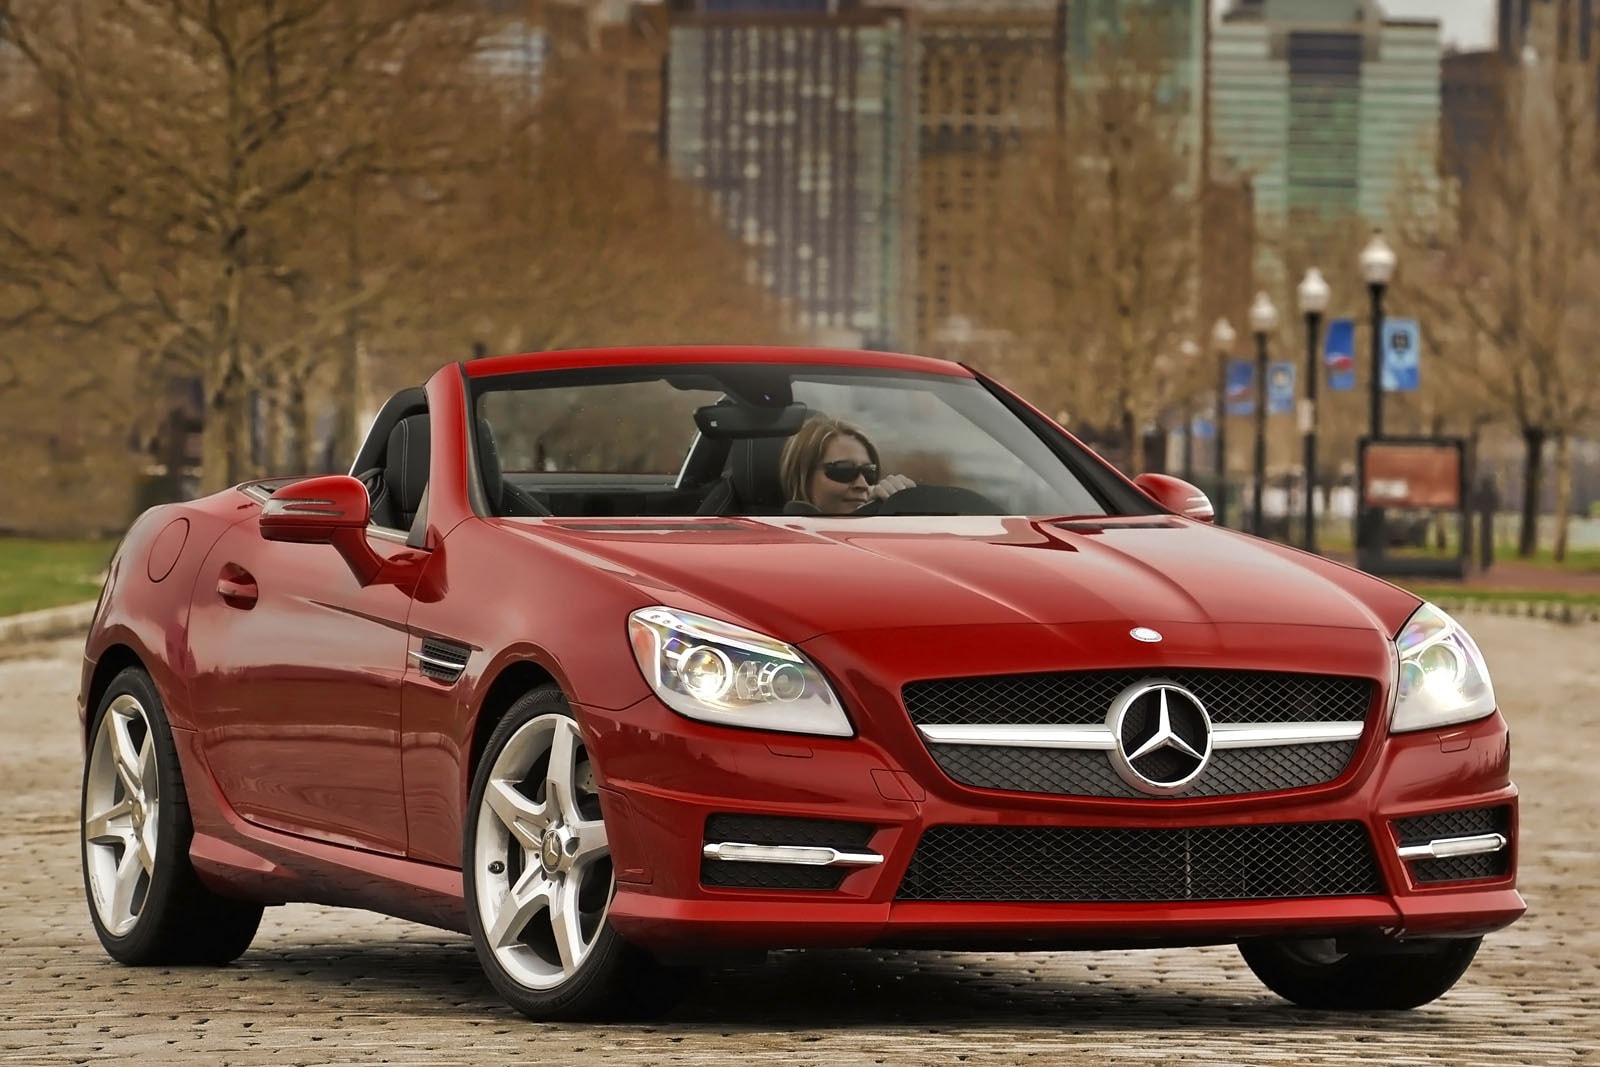 2014 Mercedes-Benz SLK-Class Review & Ratings | Edmunds